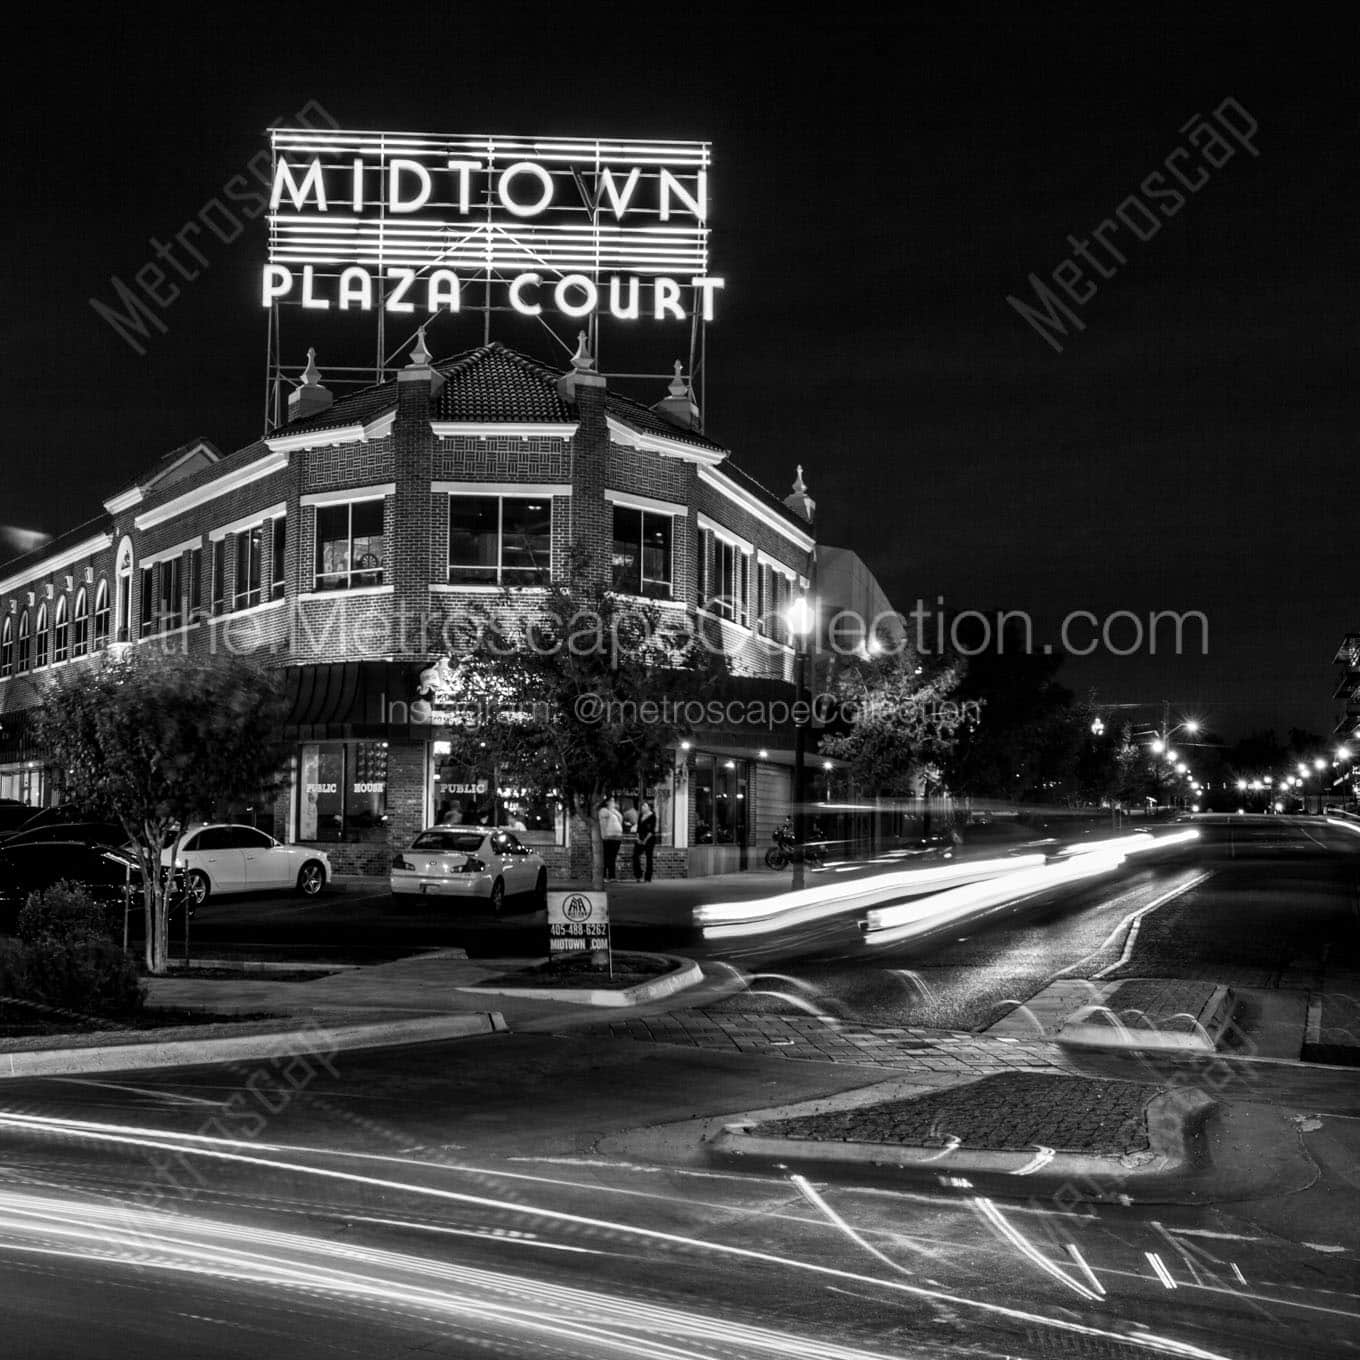 midtown plaza court at night Black & White Office Art